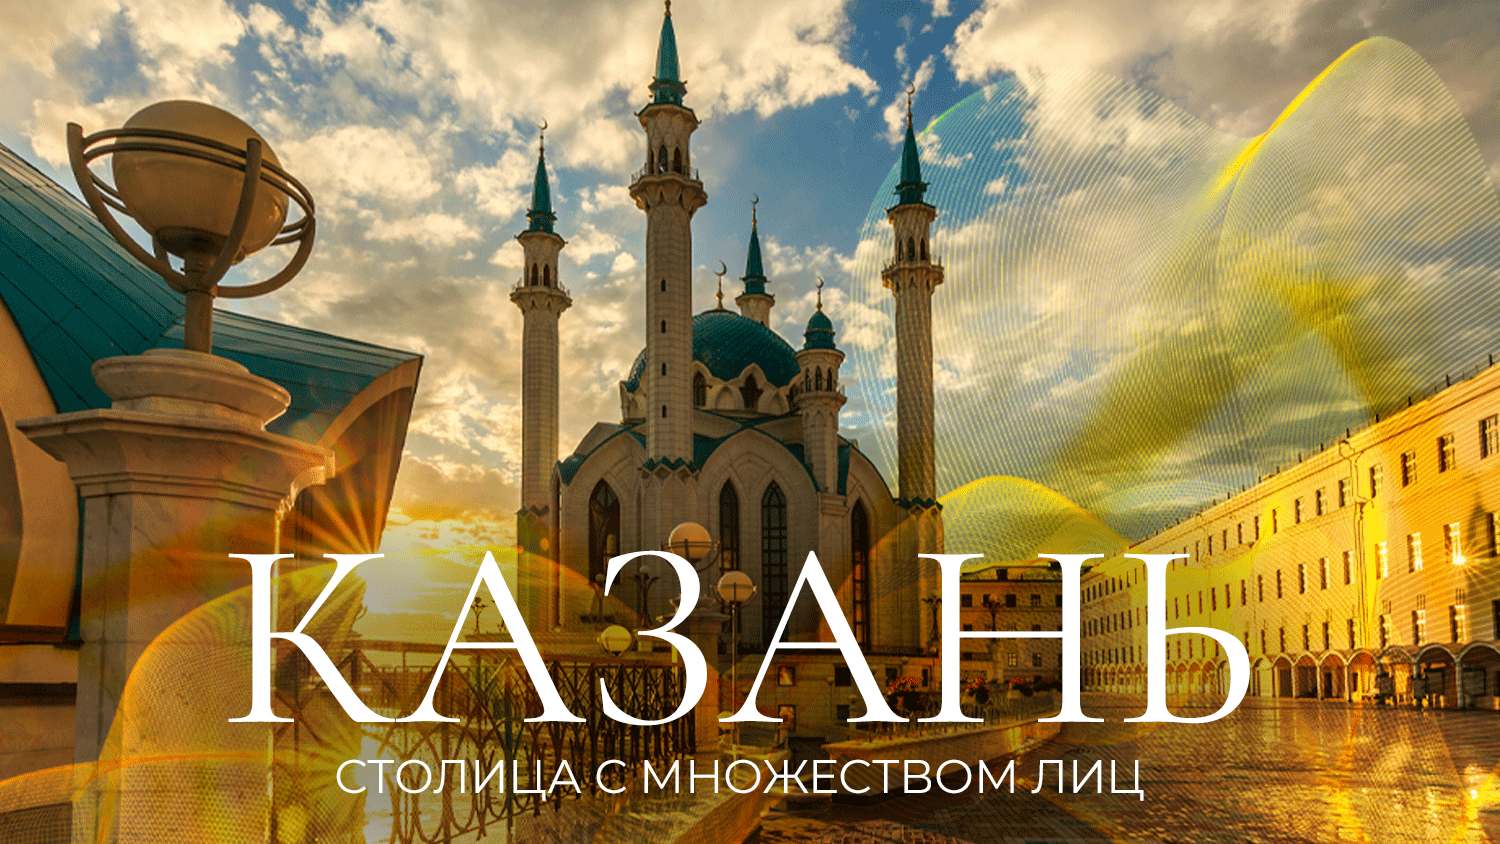 Казань третья столица